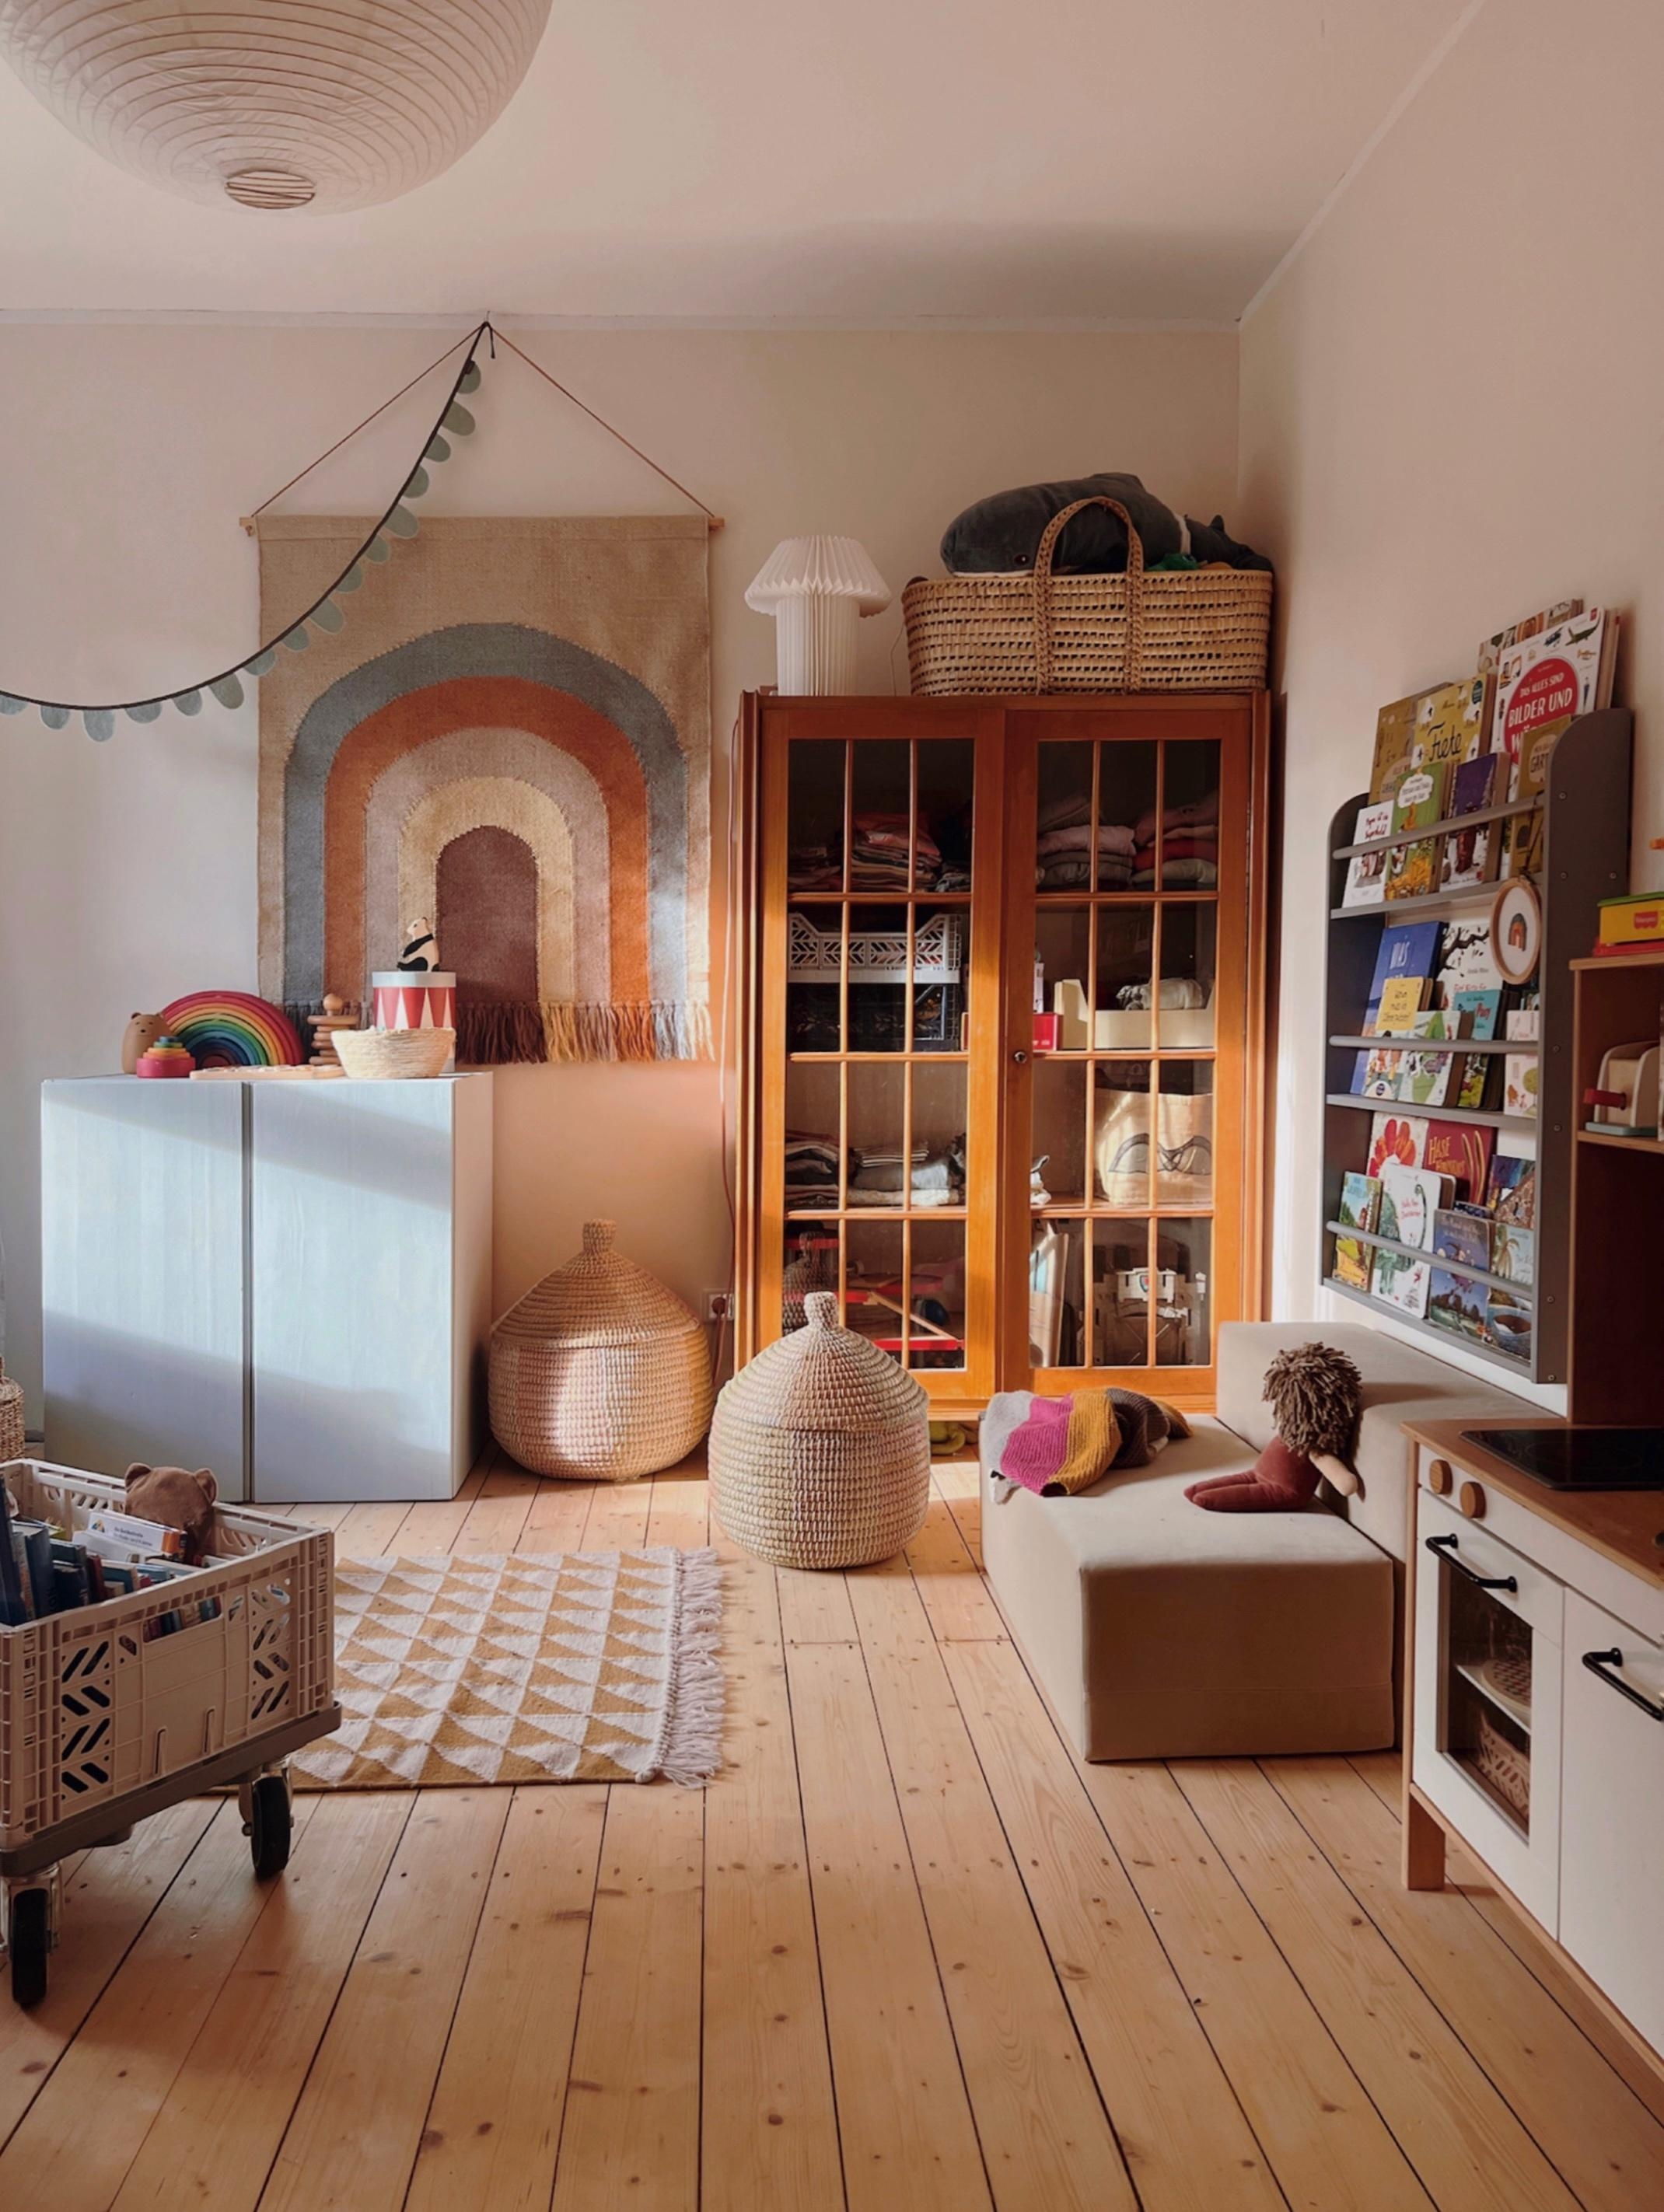 Kinderzimmer-Makeover 💕
#kinderzimmer #schrank #vintage #ivar #ikea #bücherregal #wandteppich #regenbogen #oyoy